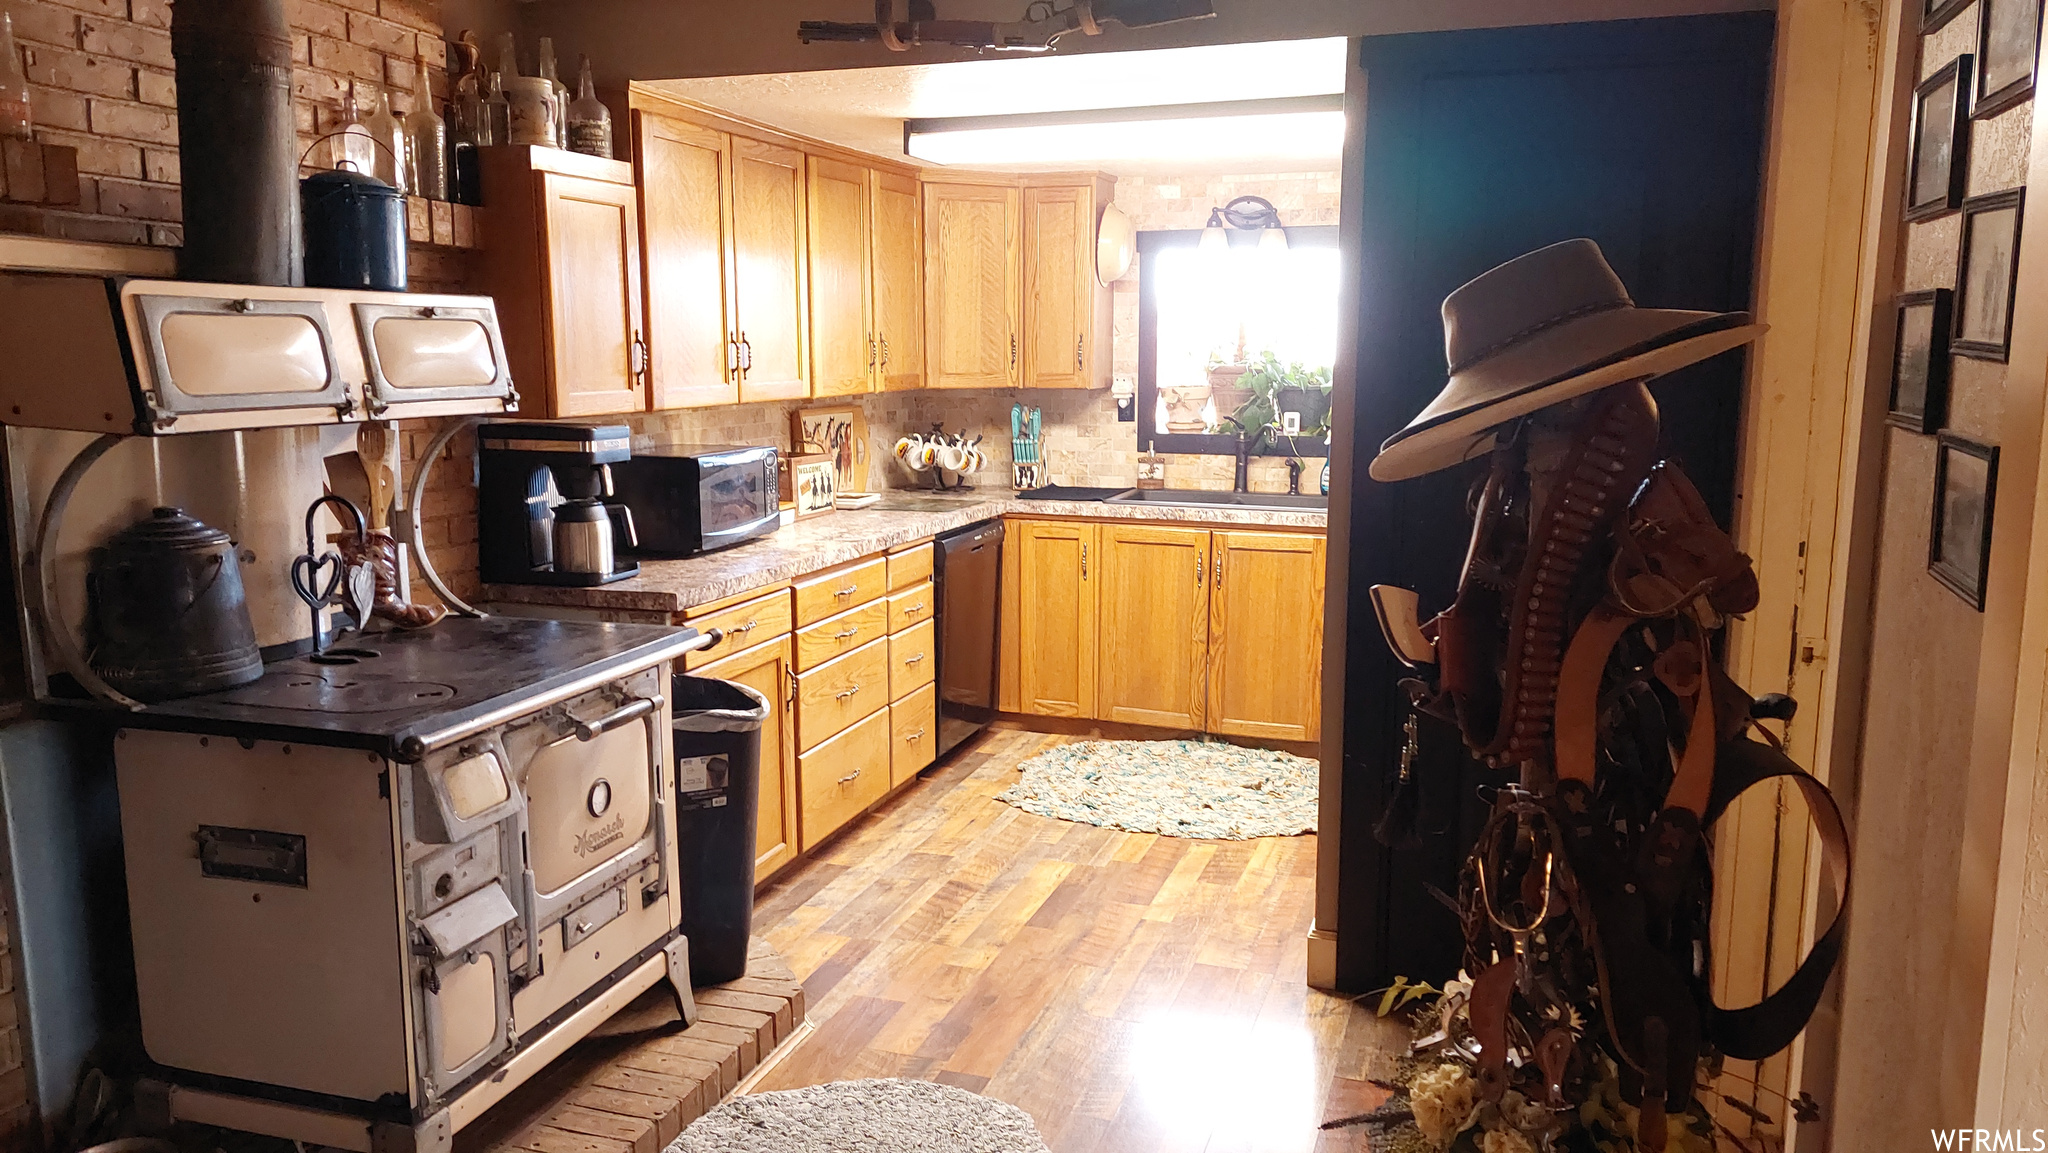 Kitchen with sink, light brown cabinetry, light wood-type flooring, dishwasher, and backsplash